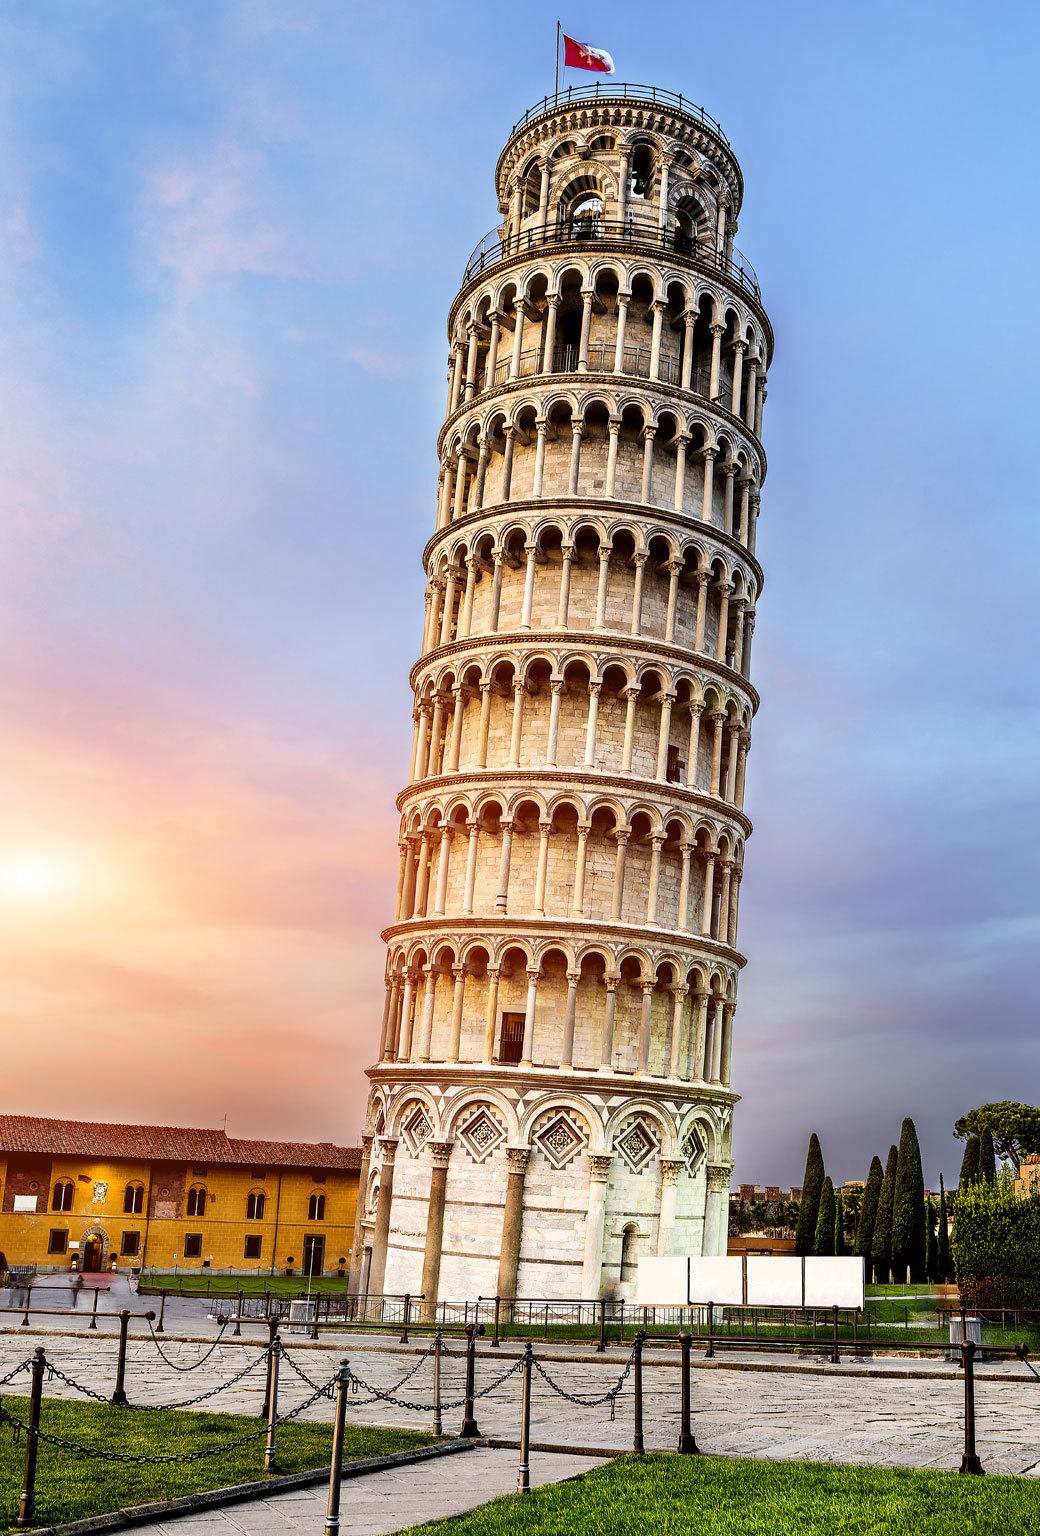 Leaning Tower of Pisa Building Desktop Wallpaper 96122 - Baltana